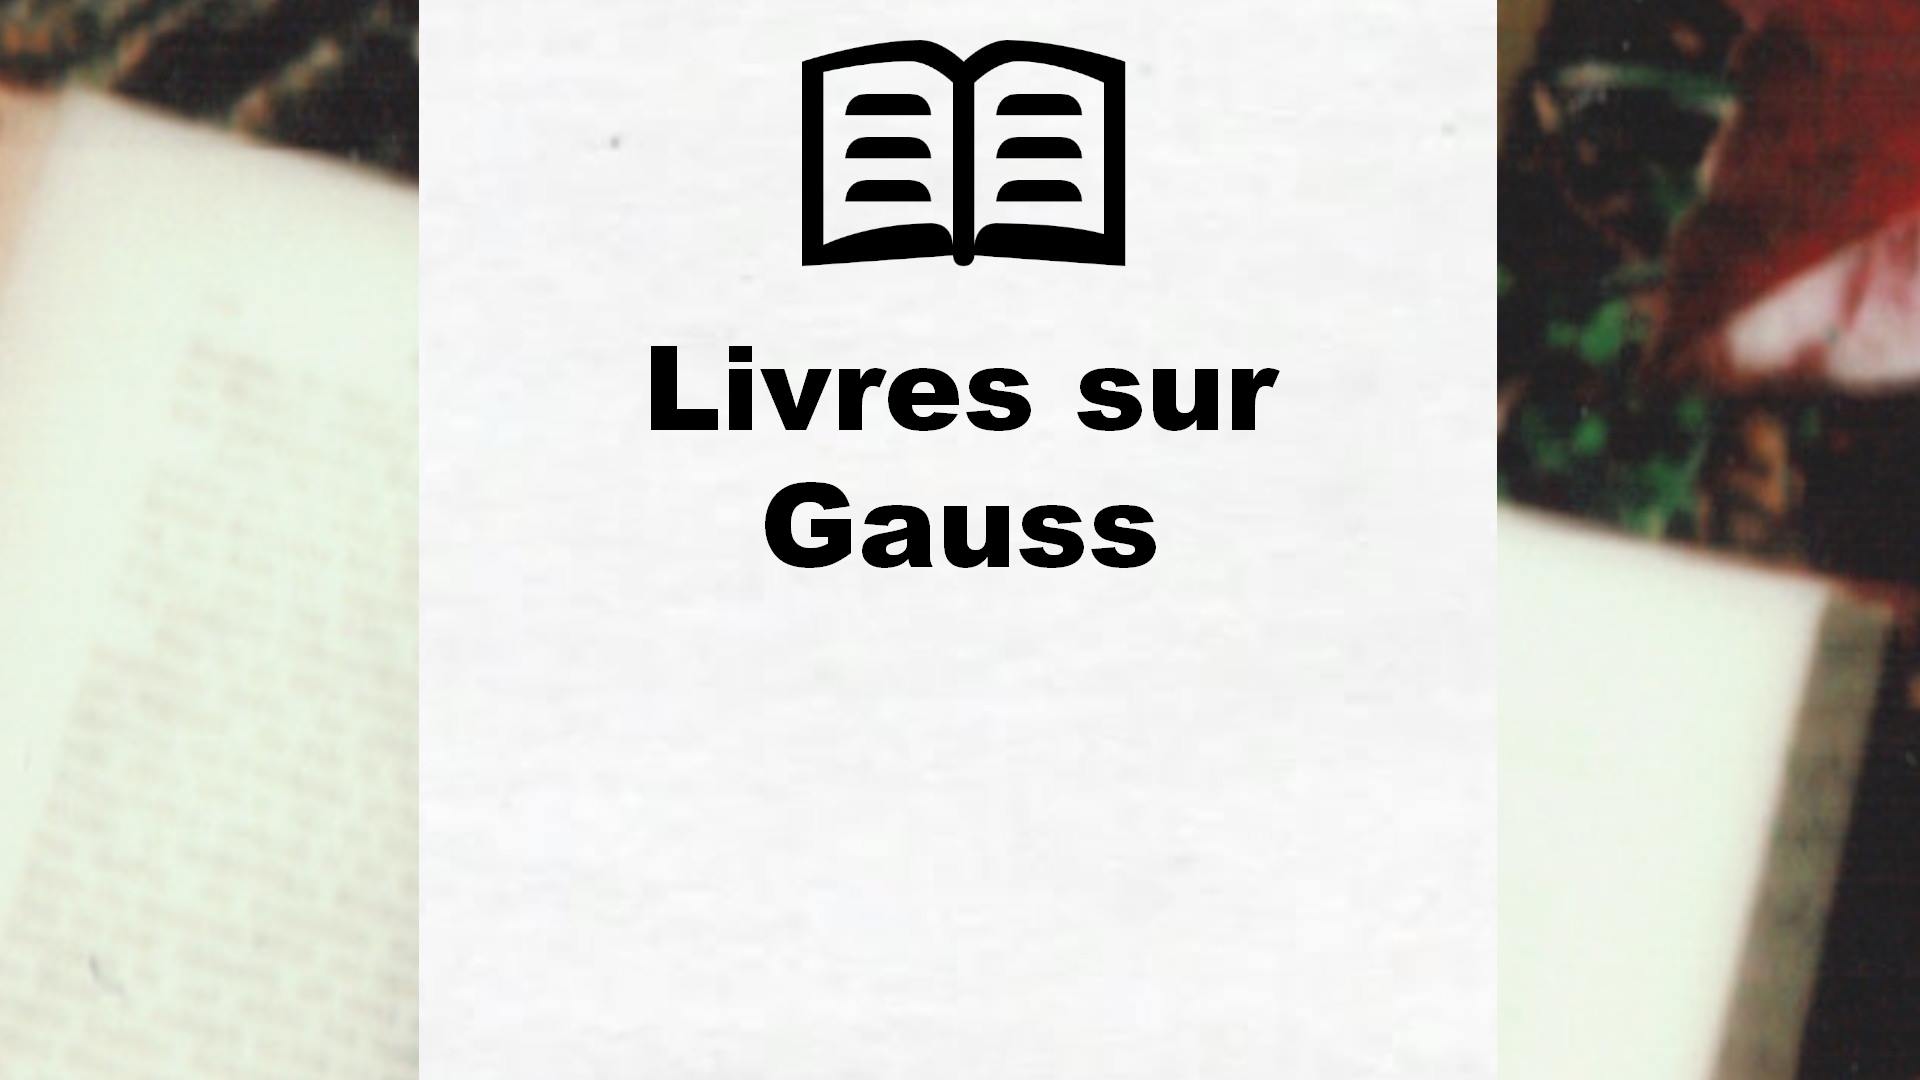 Livres sur Gauss